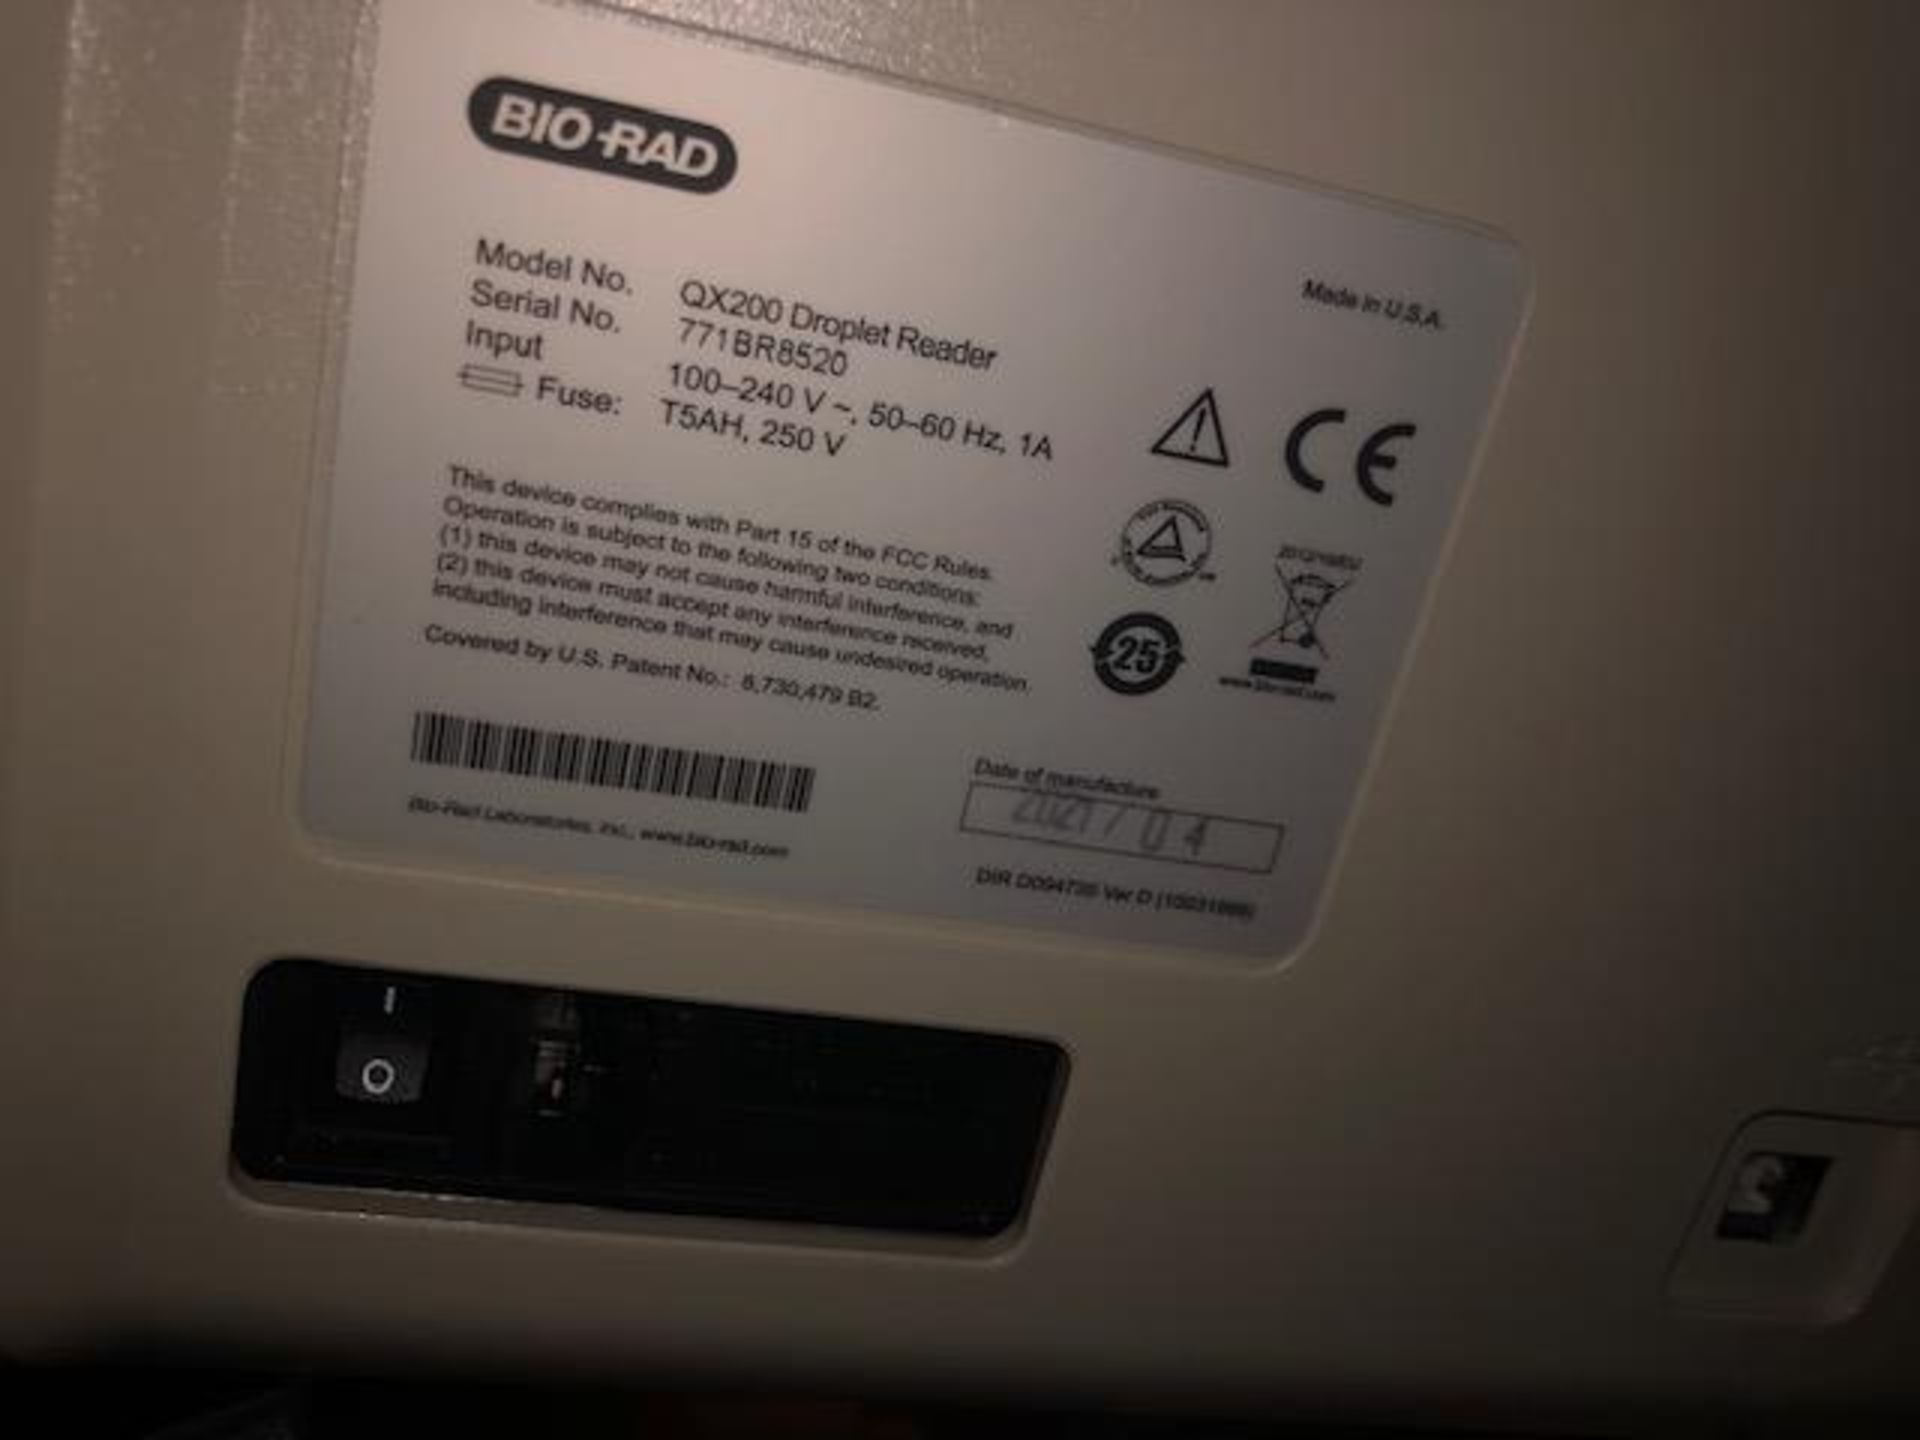 Bio Rad GX 200 Droplet Reader and Droplet Generator - Digital PCR System - Image 6 of 6